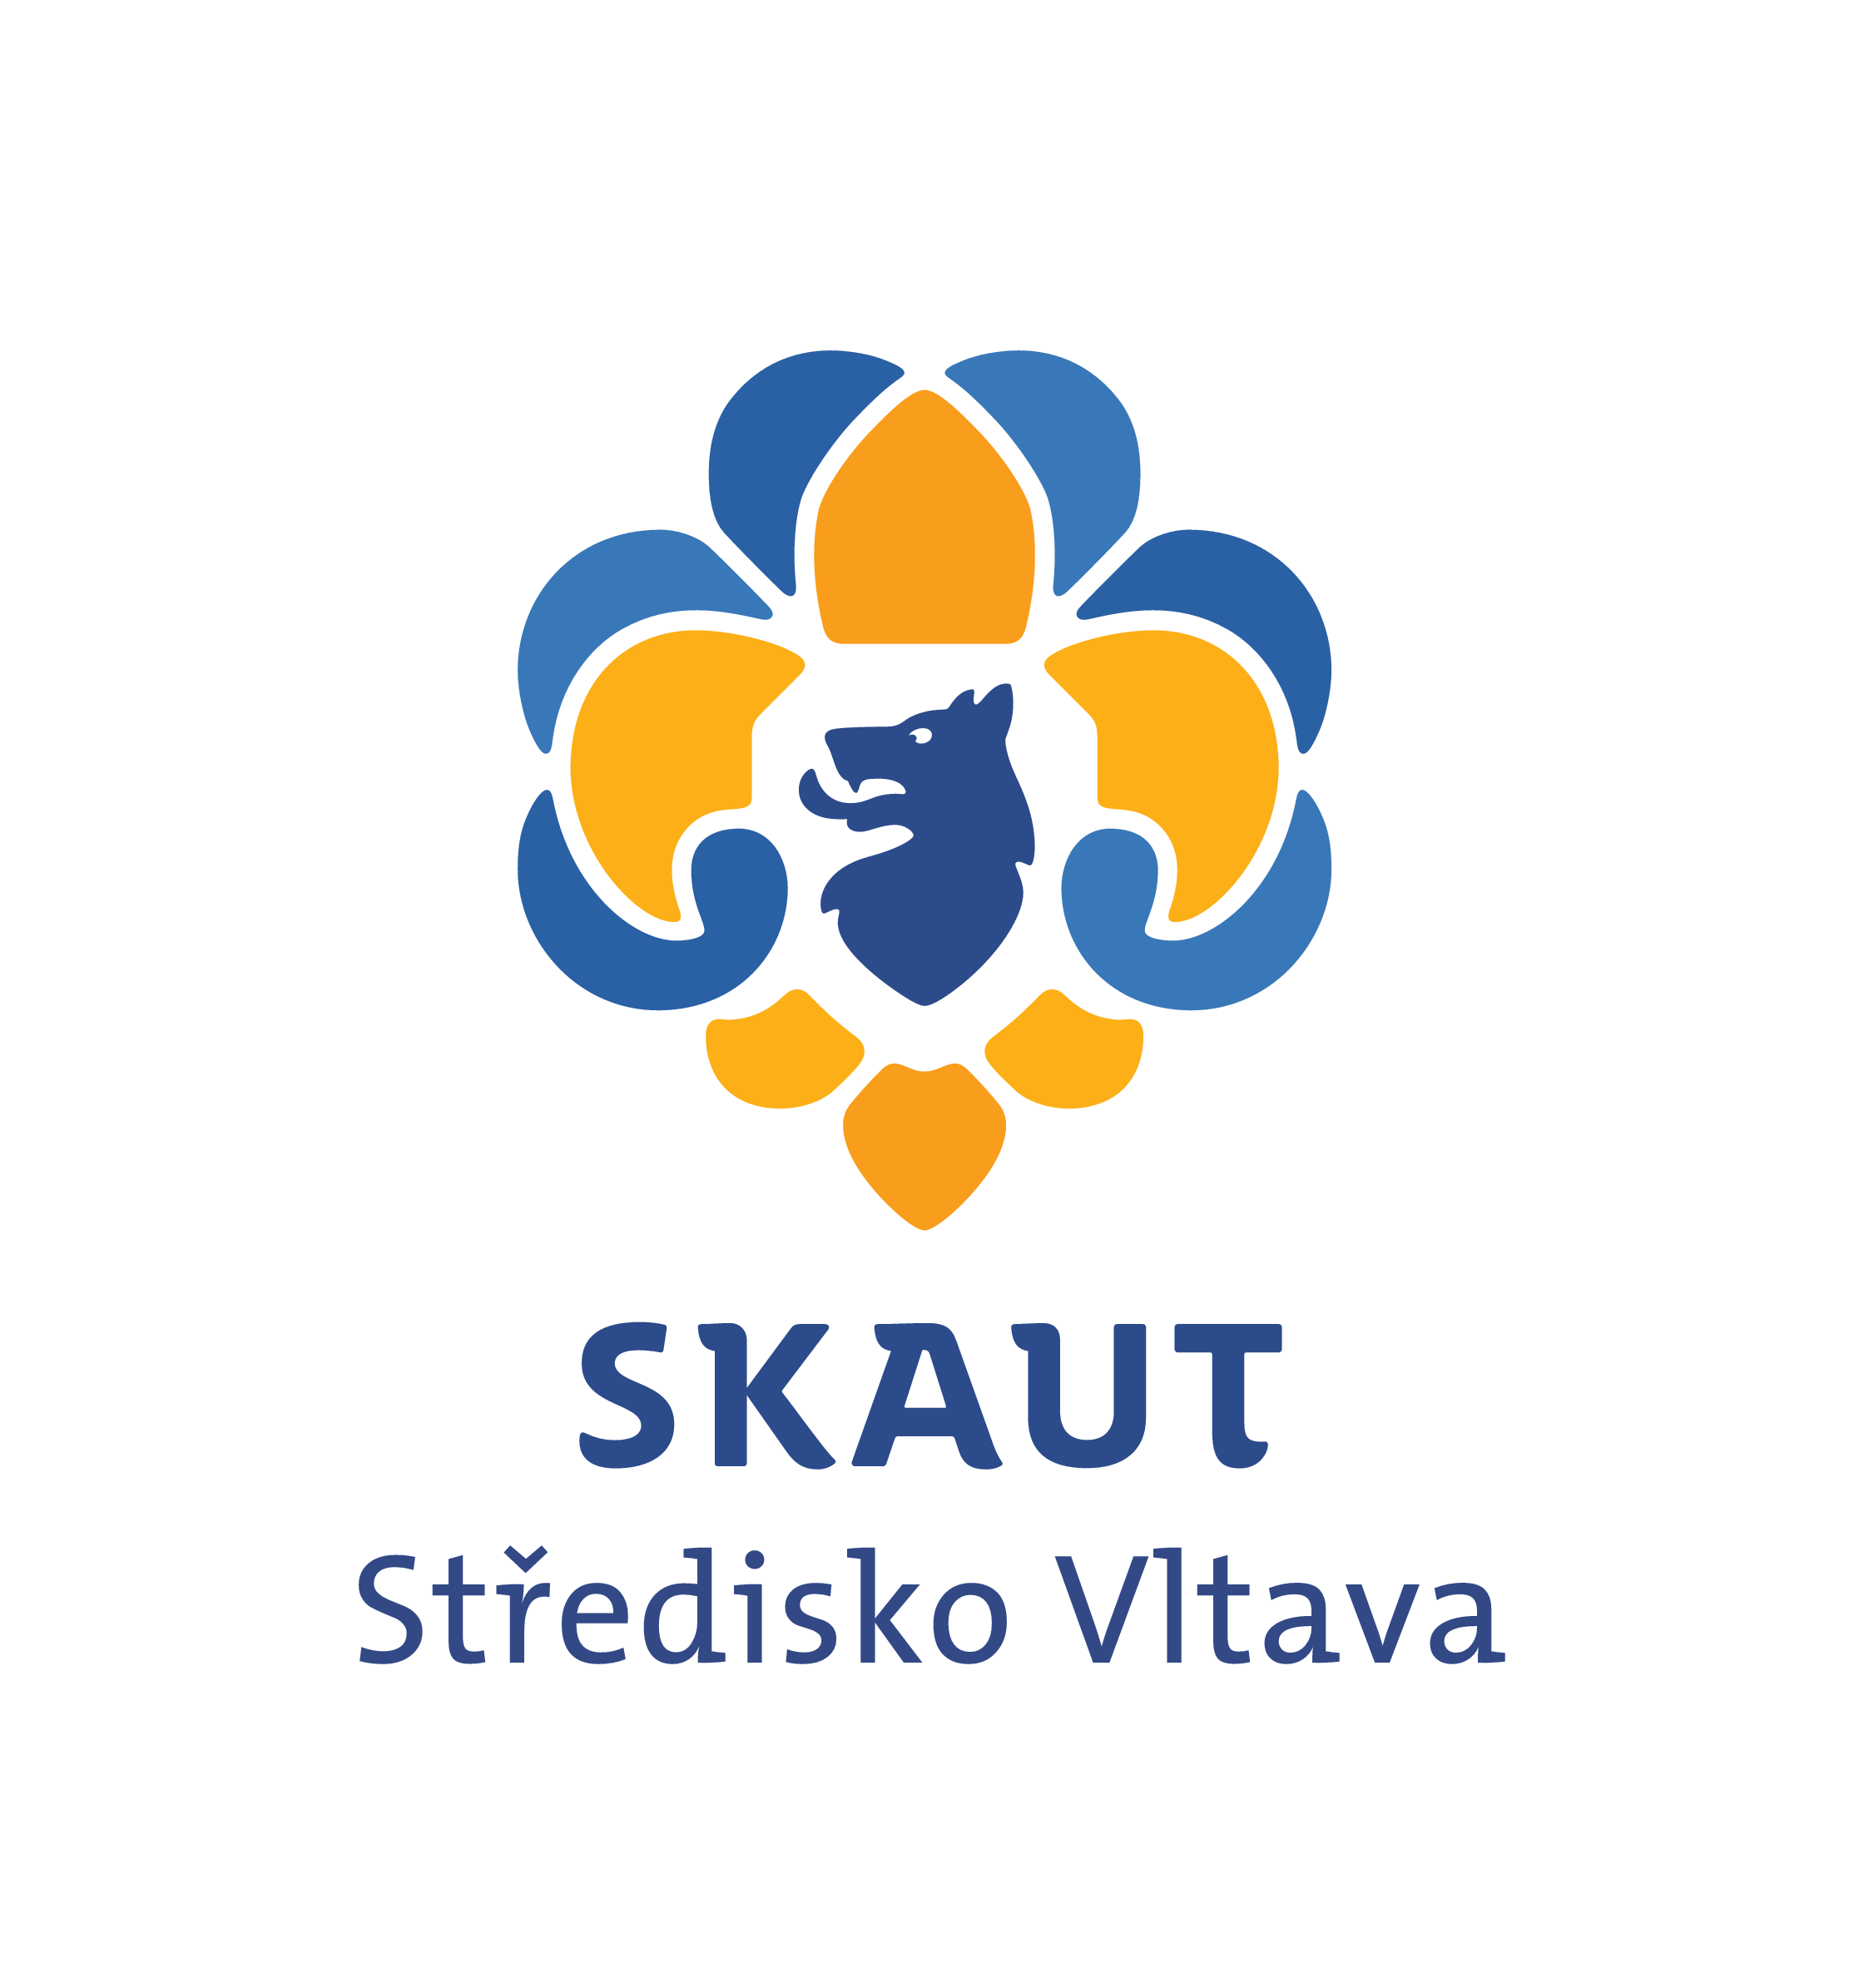 Skaut středisko Vltava logo 02